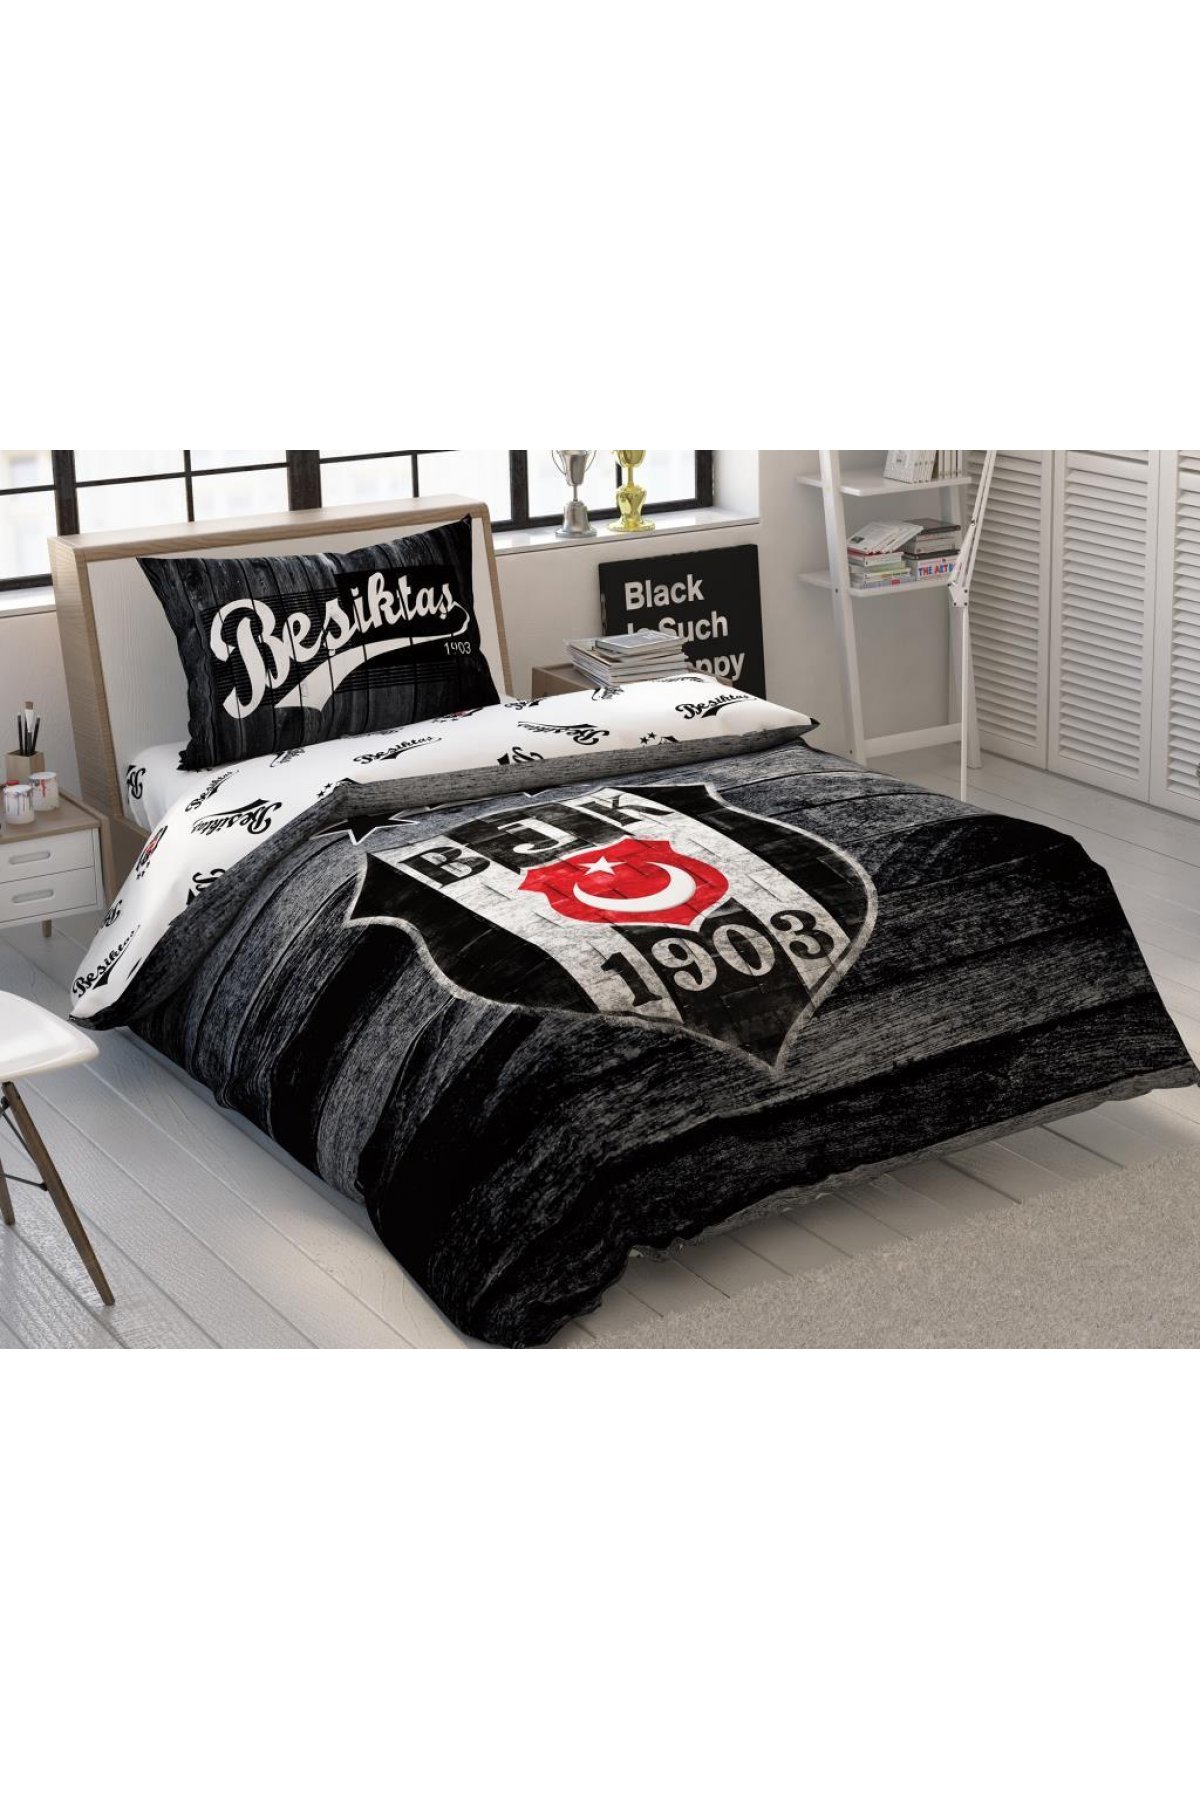 Bedding-Black-White